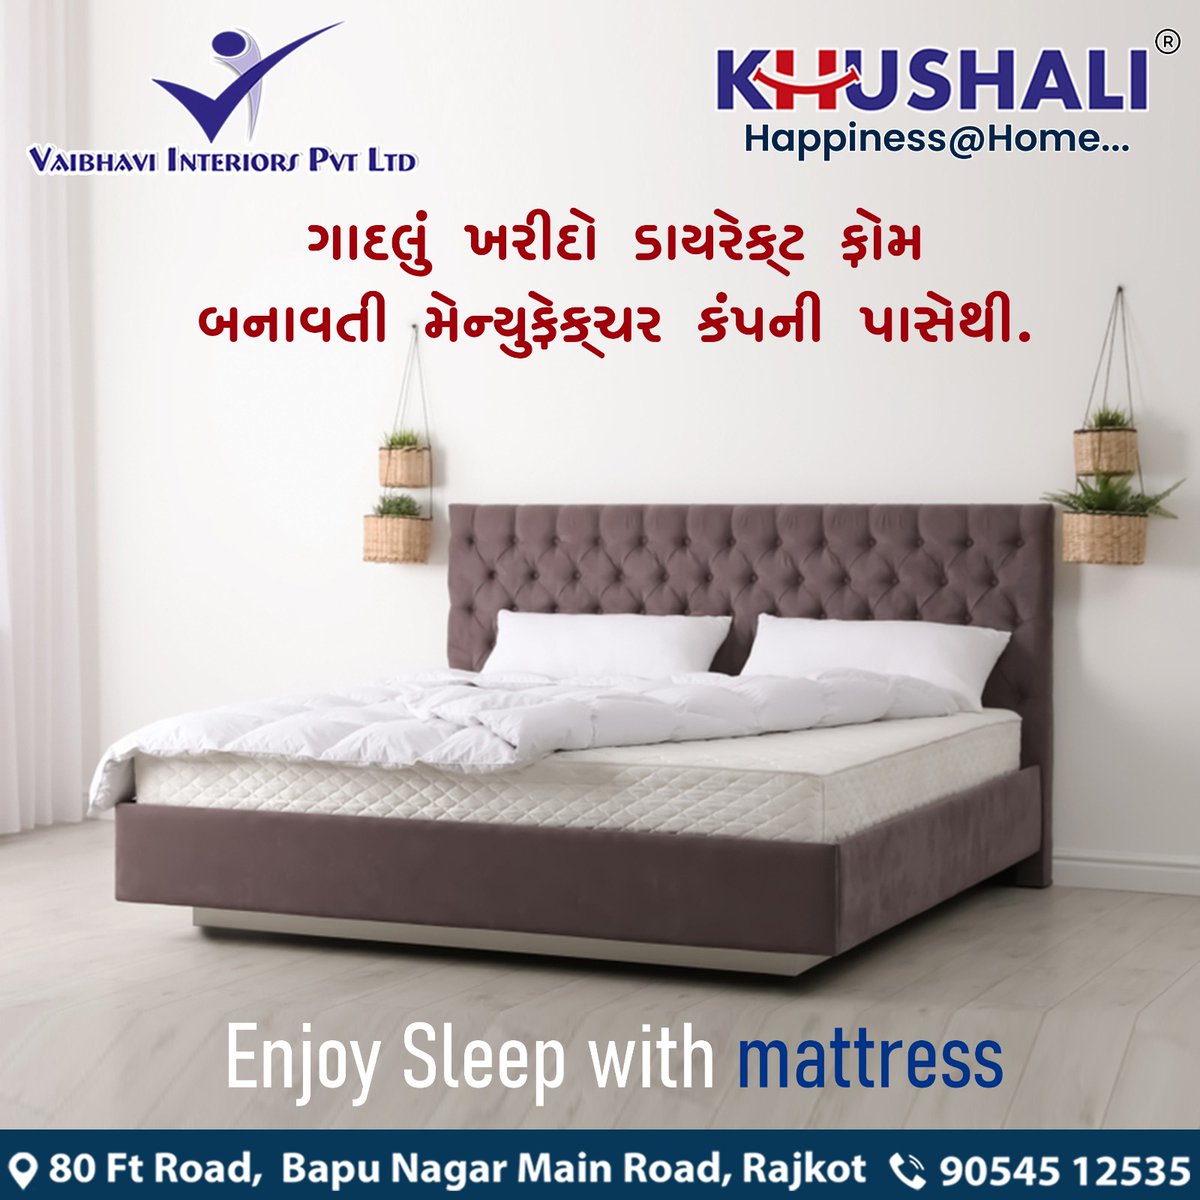 Enjoy your sleep with perfect and comfortable mattress 
Order now:- 09054512535
.
.
.
#vaibhaviinteriorpvtltd #mattress #vaibhavi #interior #khushali #happineshome #softmattress #bed #bedroom #sleep #guarantee #15years #sleepbetter #healthysleep #SleepBetterFeelBetter